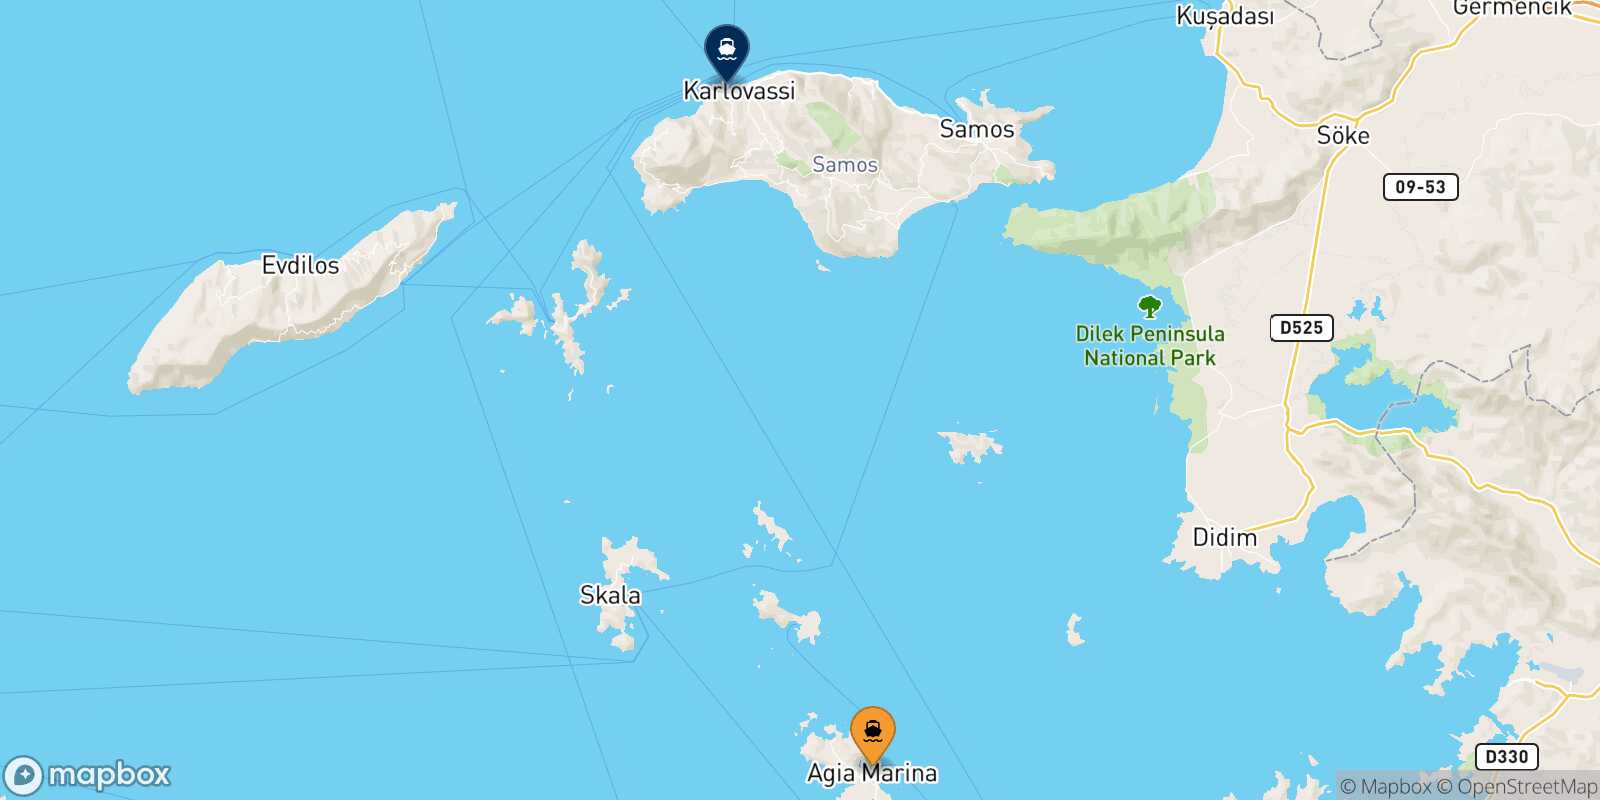 Carte des traverséesLeros Karlovassi (Samos)